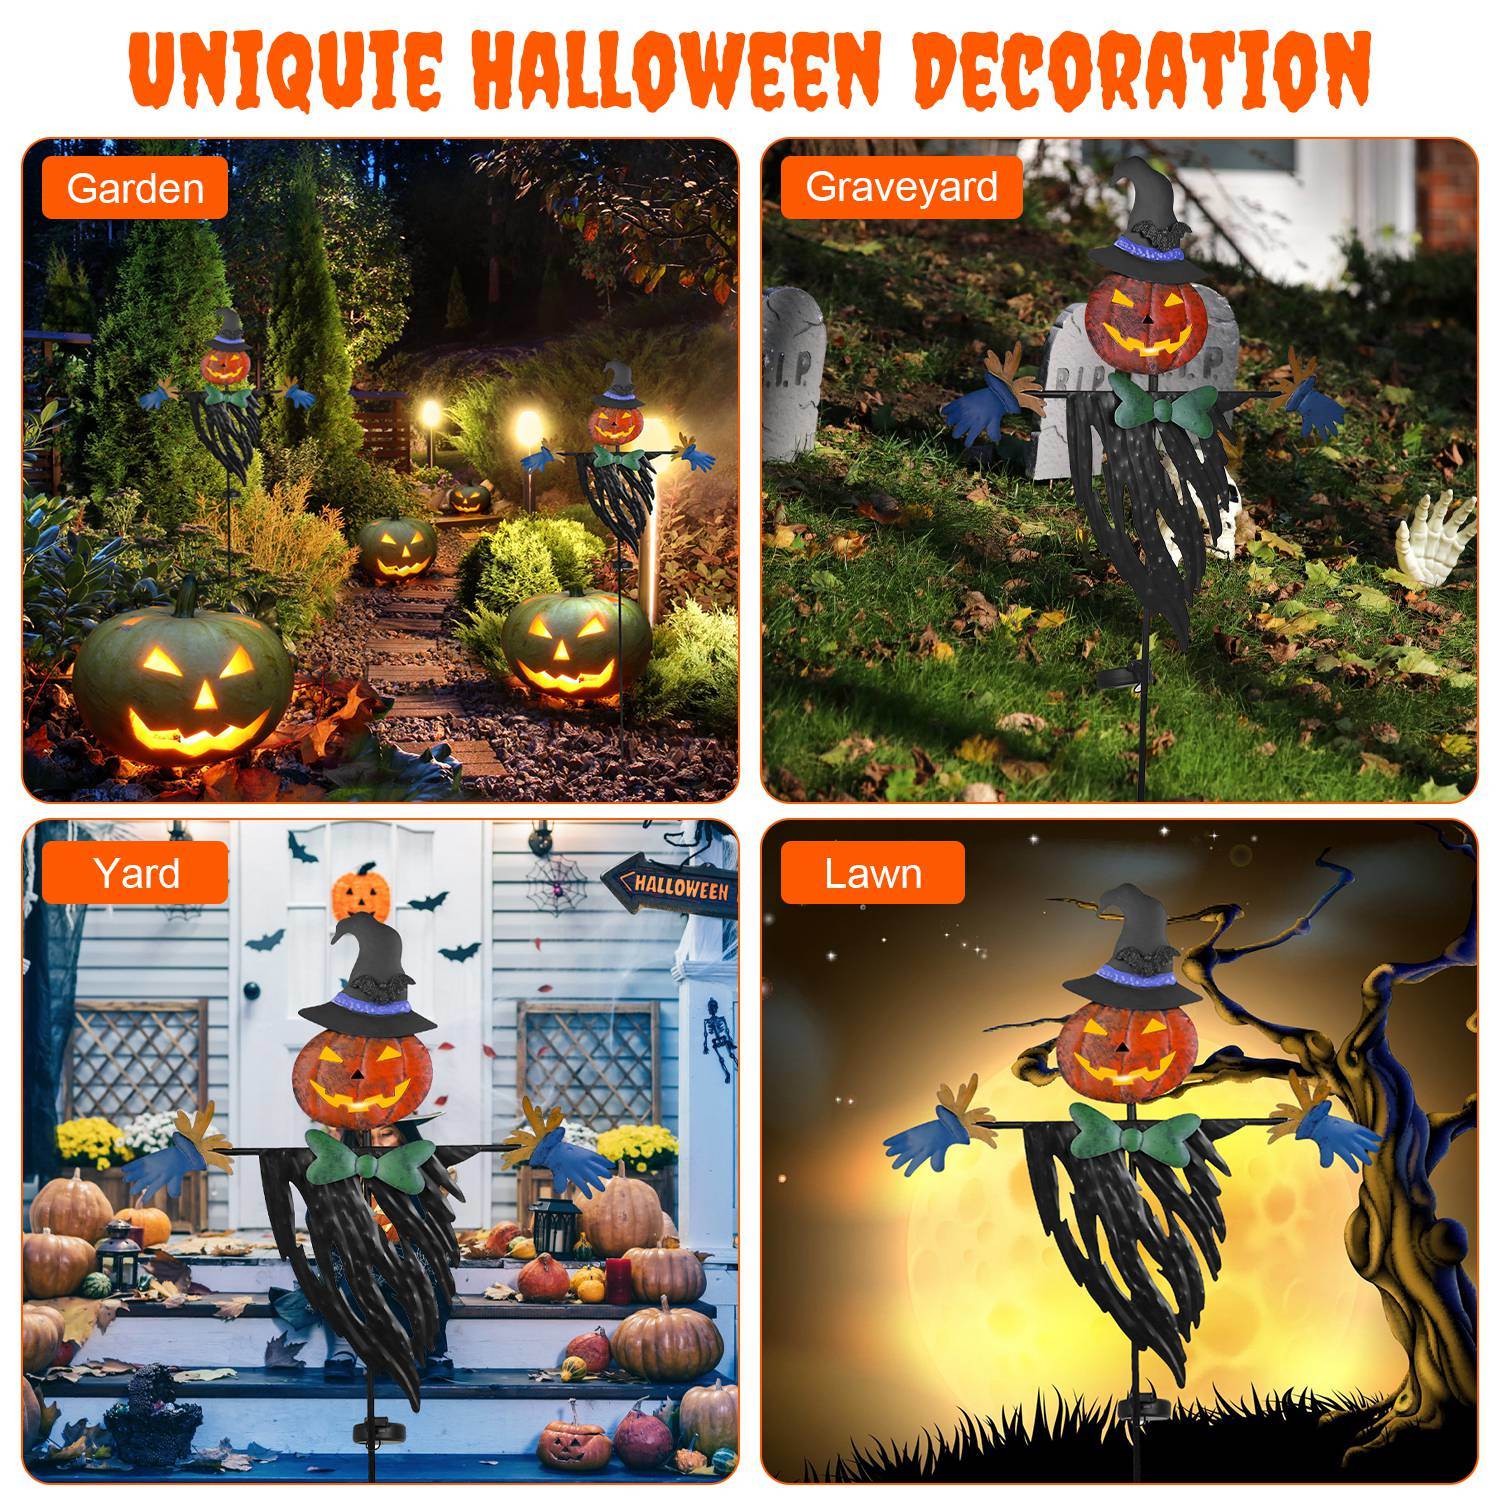 Halloween Decorations for Garden